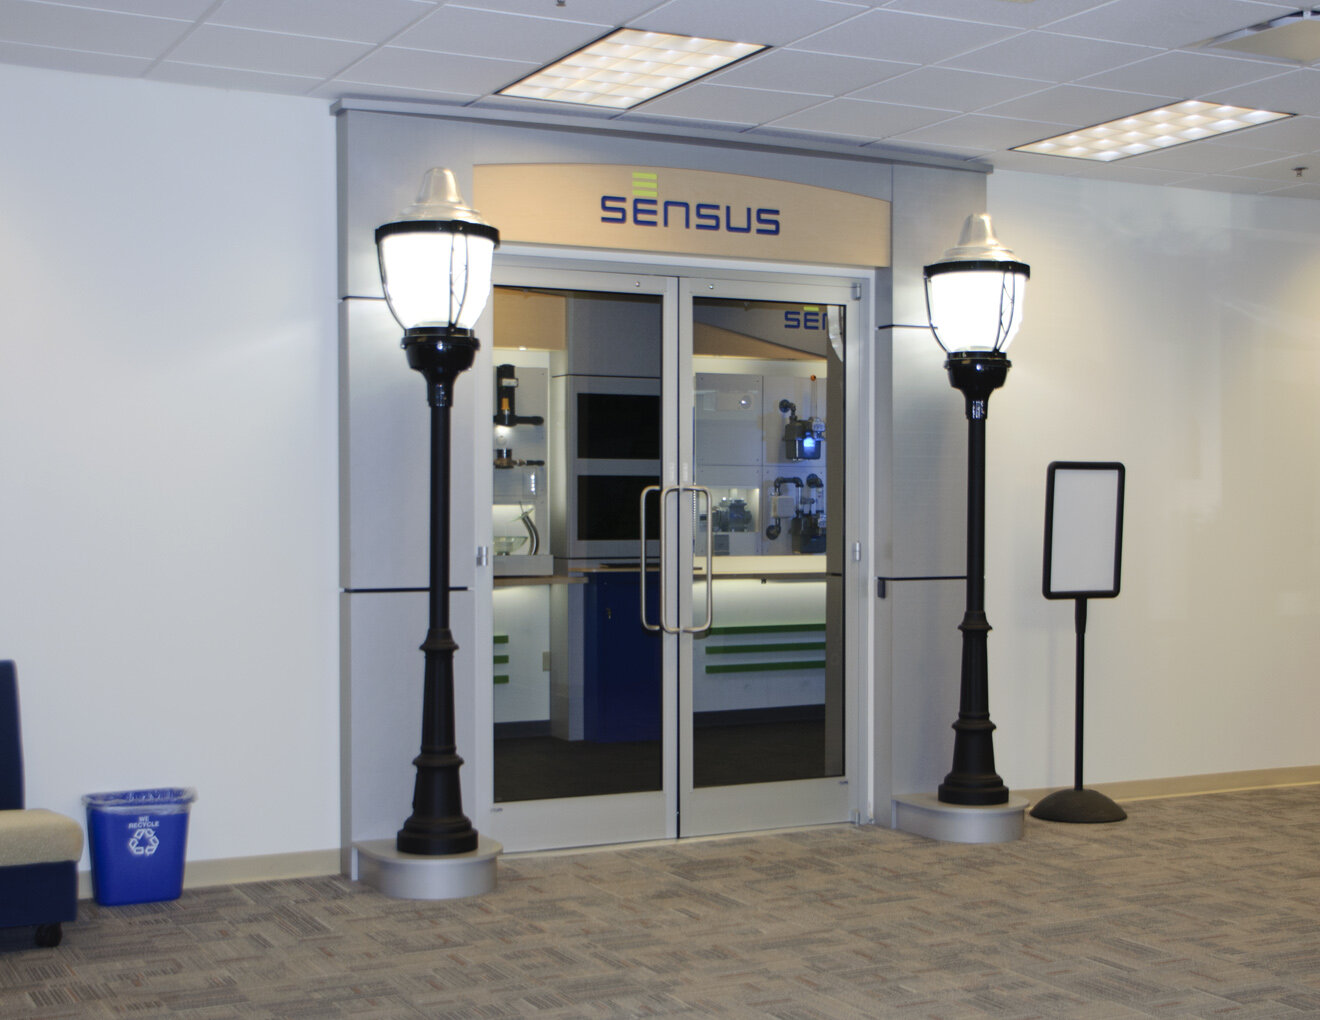 Sensus-Entrance Image.jpg